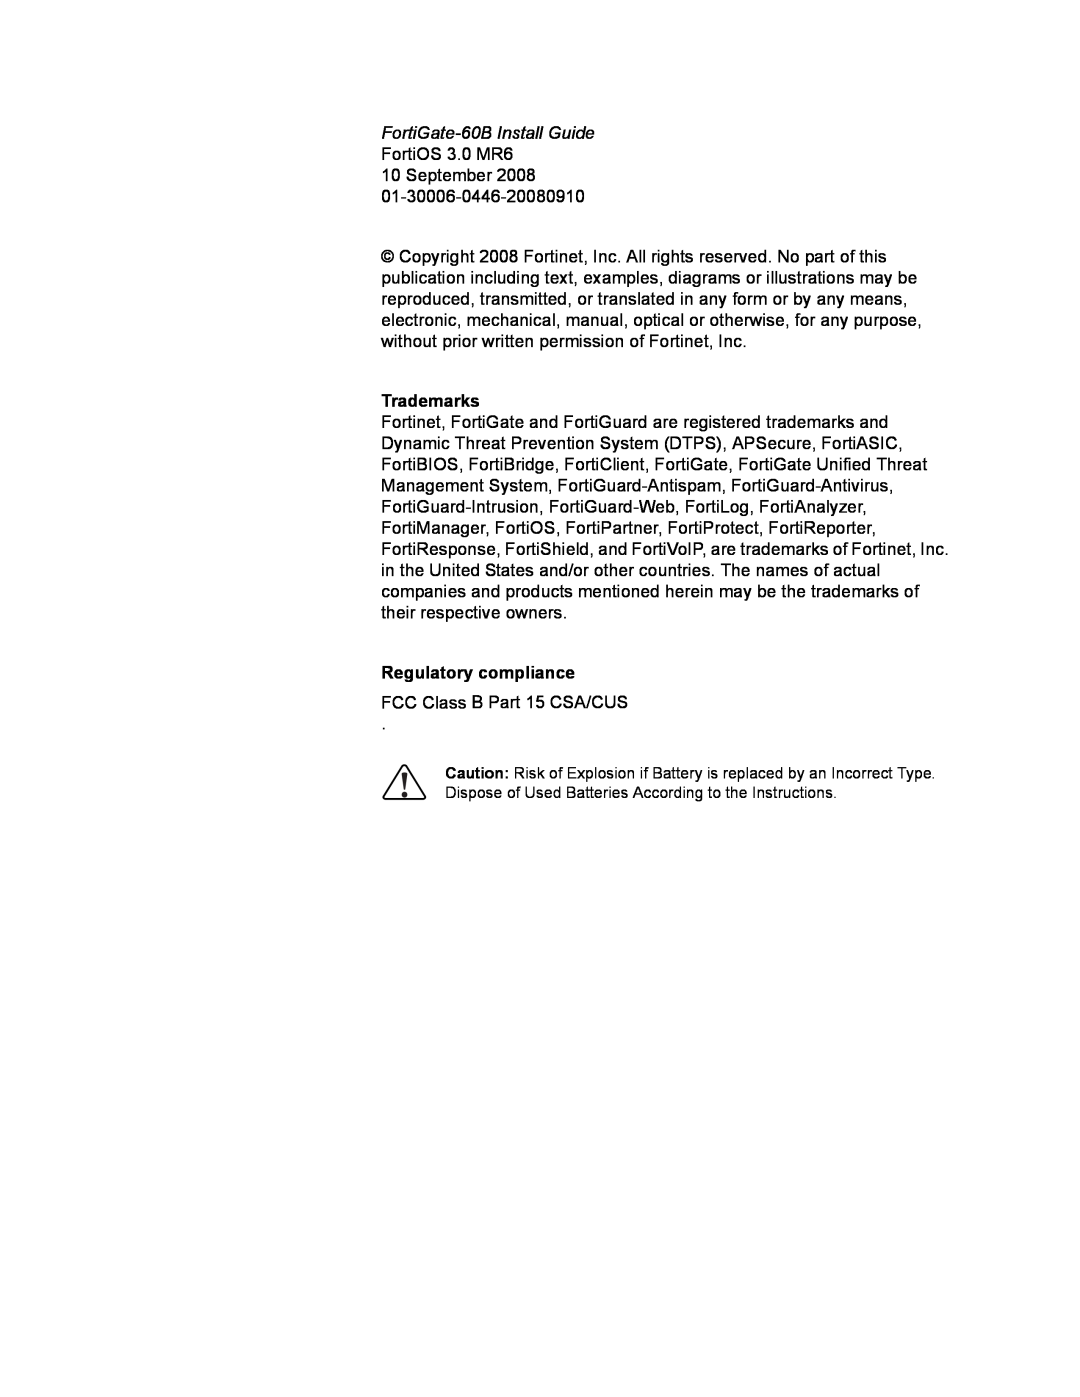 Fortinet manual FortiGate-60B Install Guide, Trademarks, Regulatory compliance 